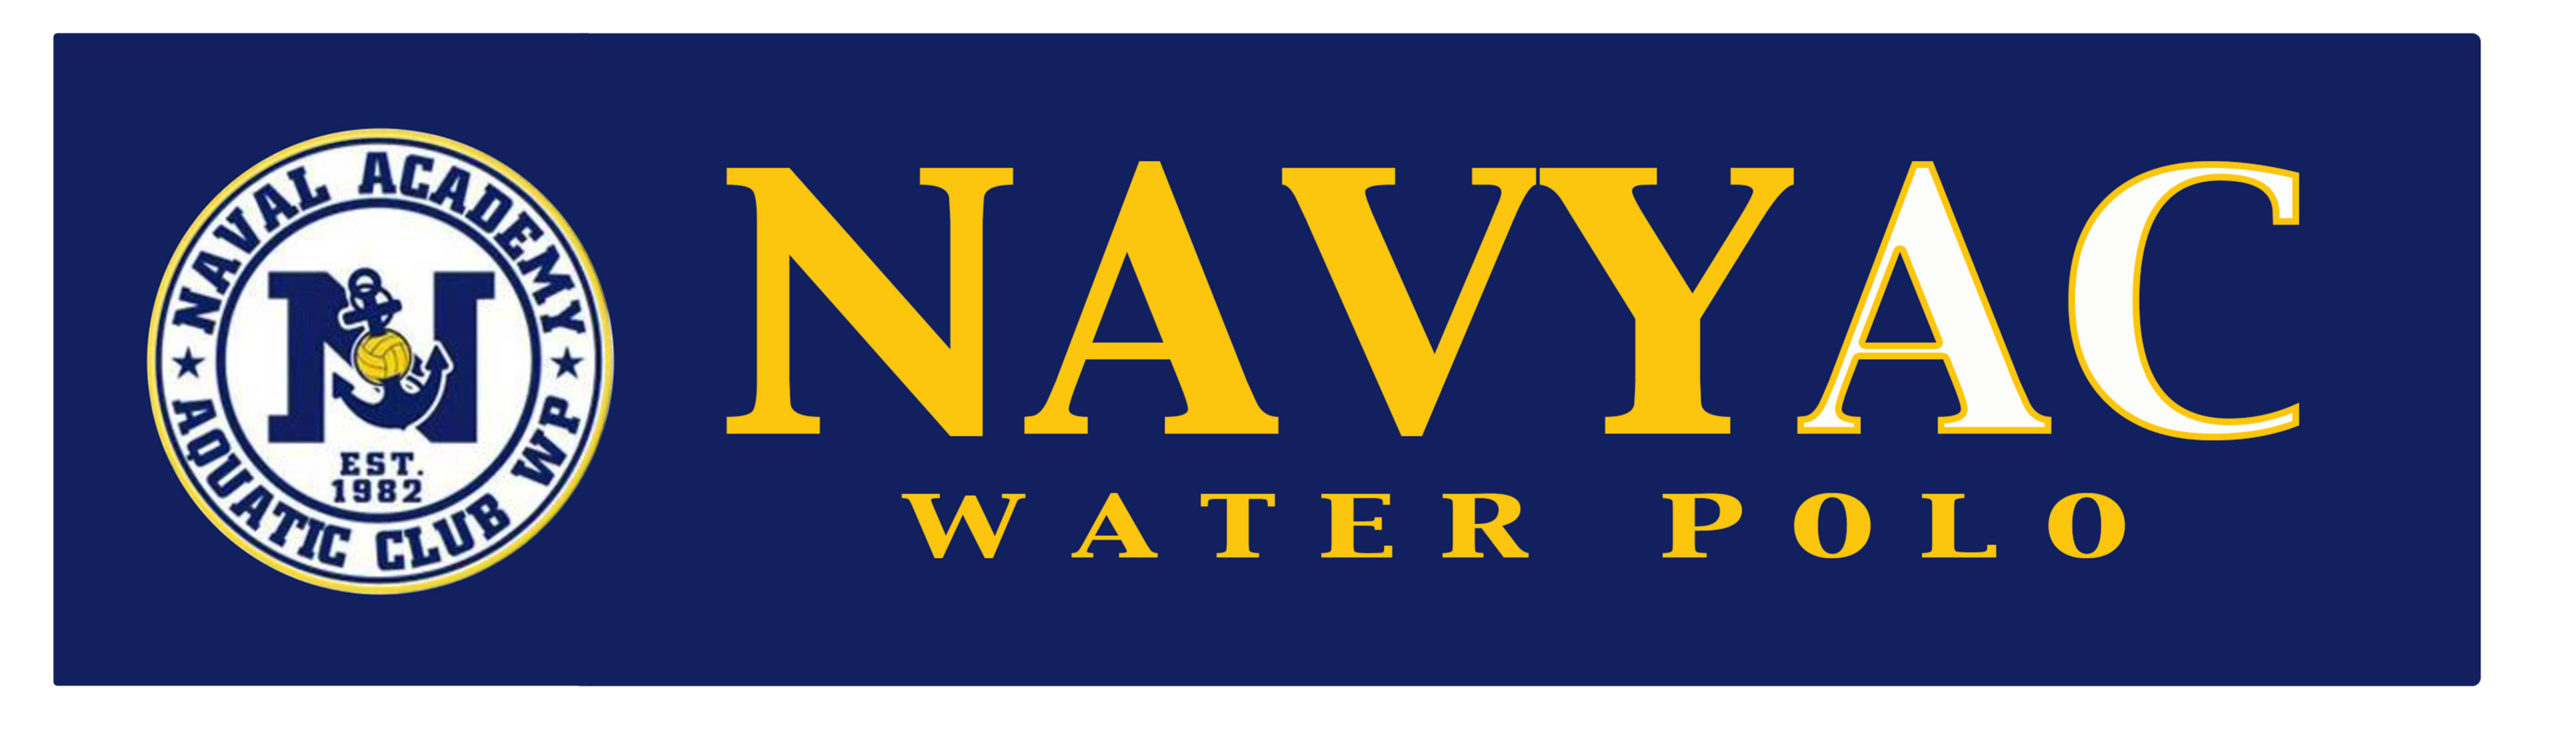 Naval Academy Aquatic Club